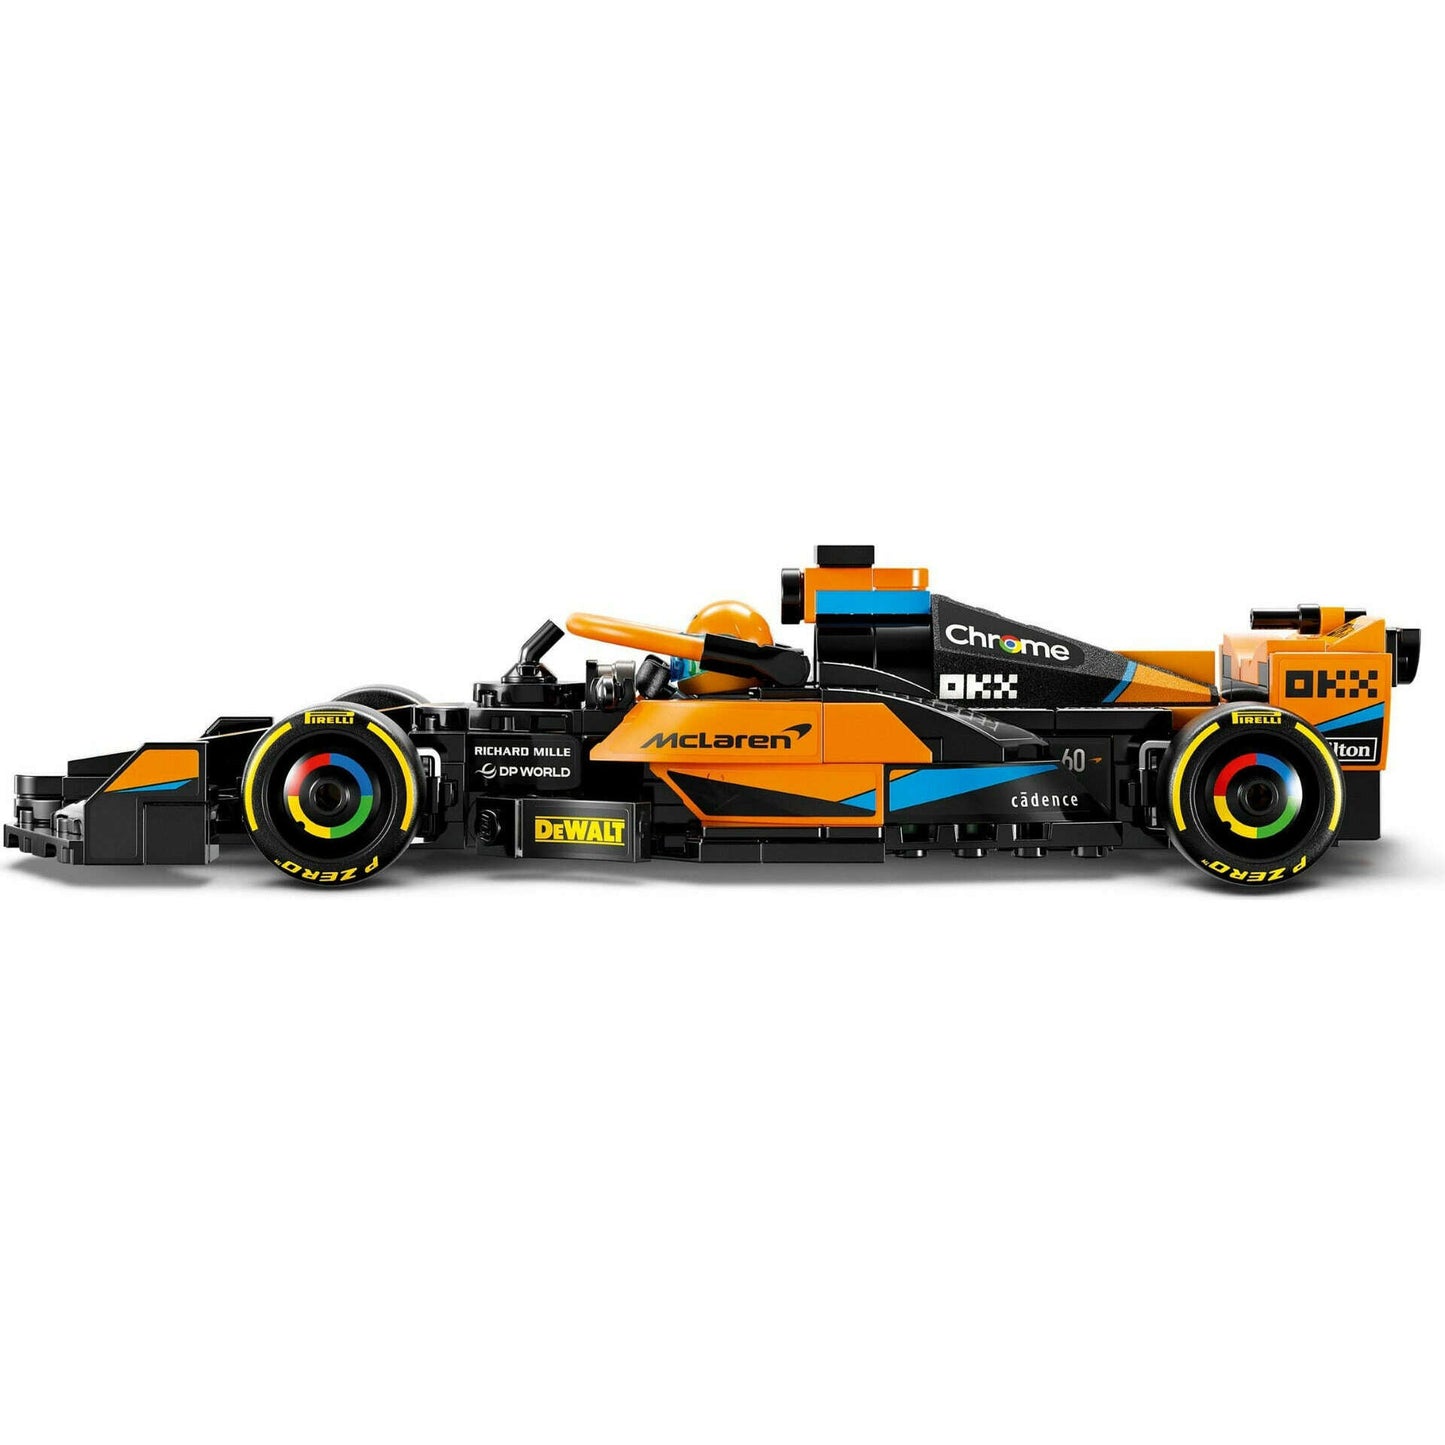 Toys N Tuck:Lego 76919 Speed Champions 2023 McLaren Formula 1 Race Car,Lego Speed Champions